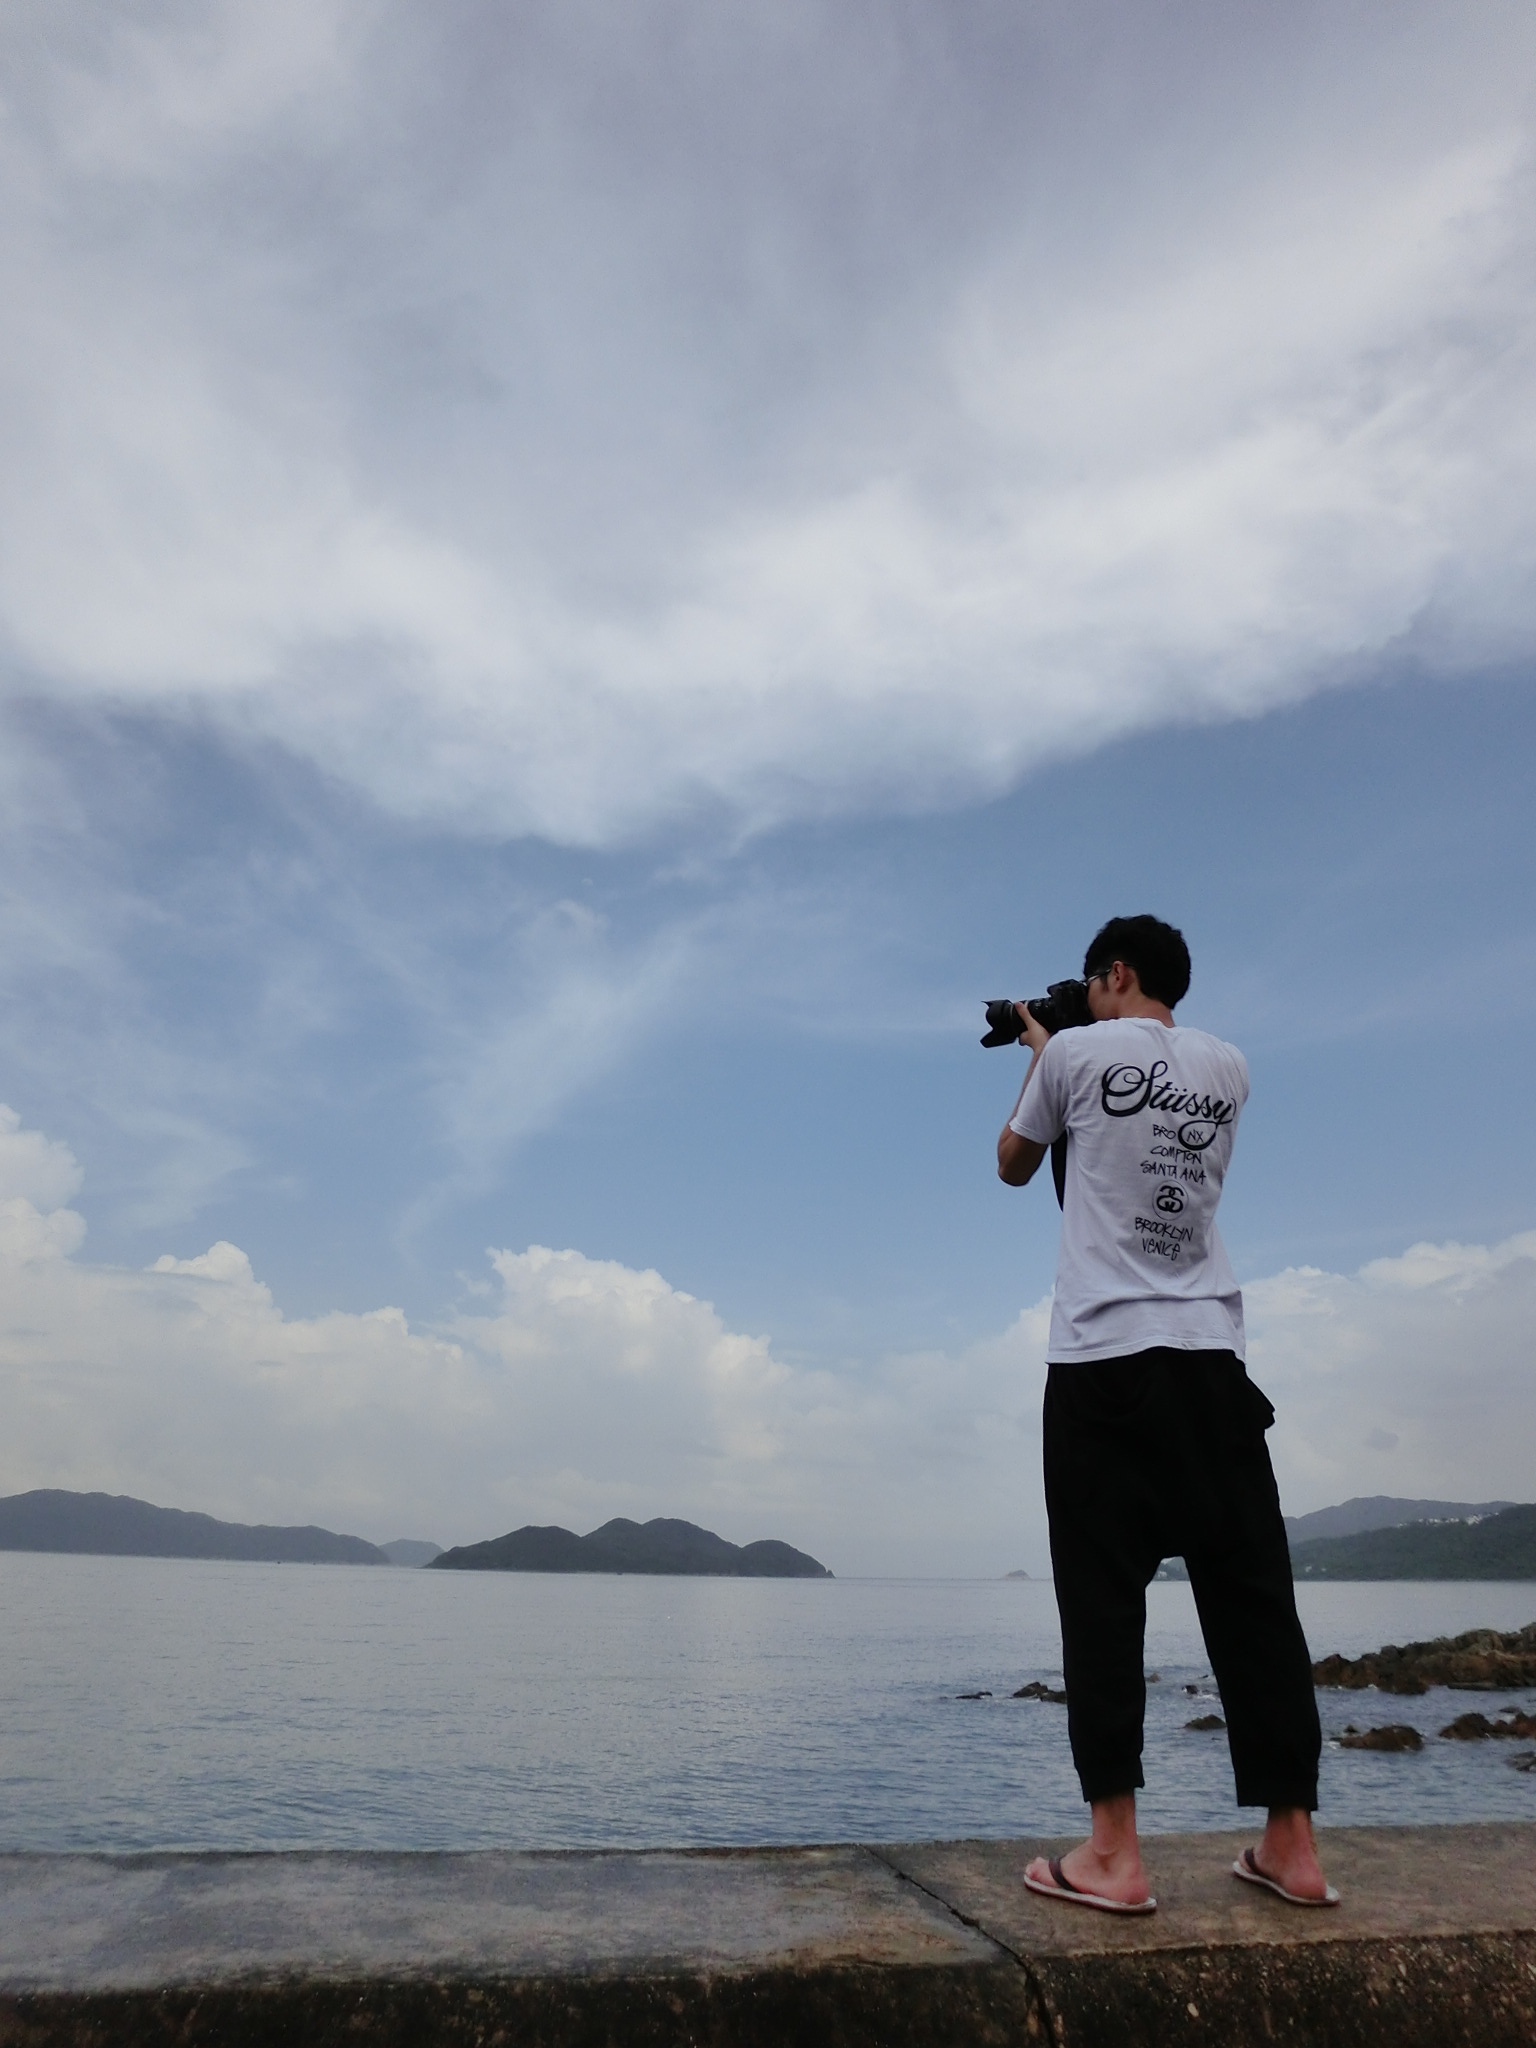 Student Taking Photo in Hong Kong